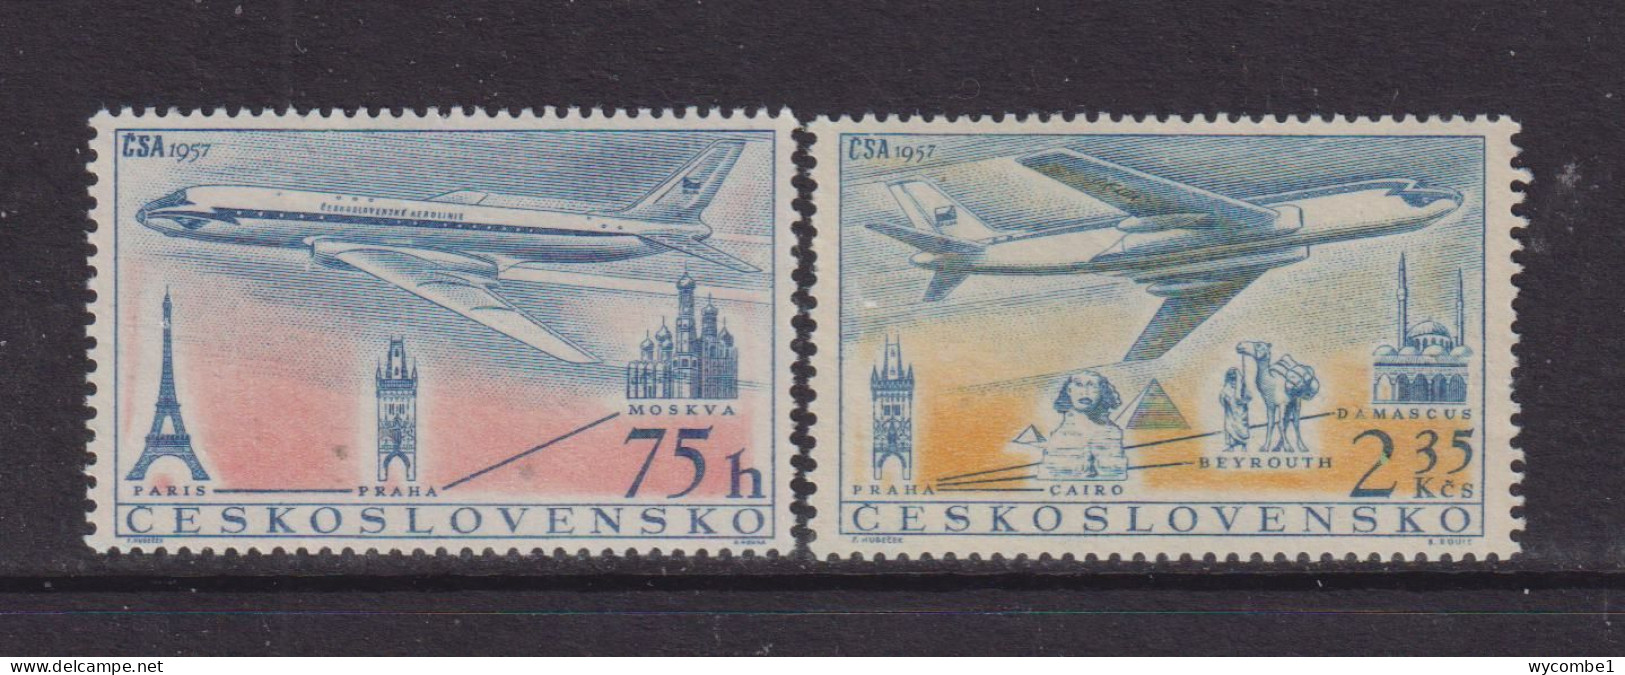 CZECHOSLOVAKIA  - 1957 Air Set  Never Hinged Mint - Unused Stamps